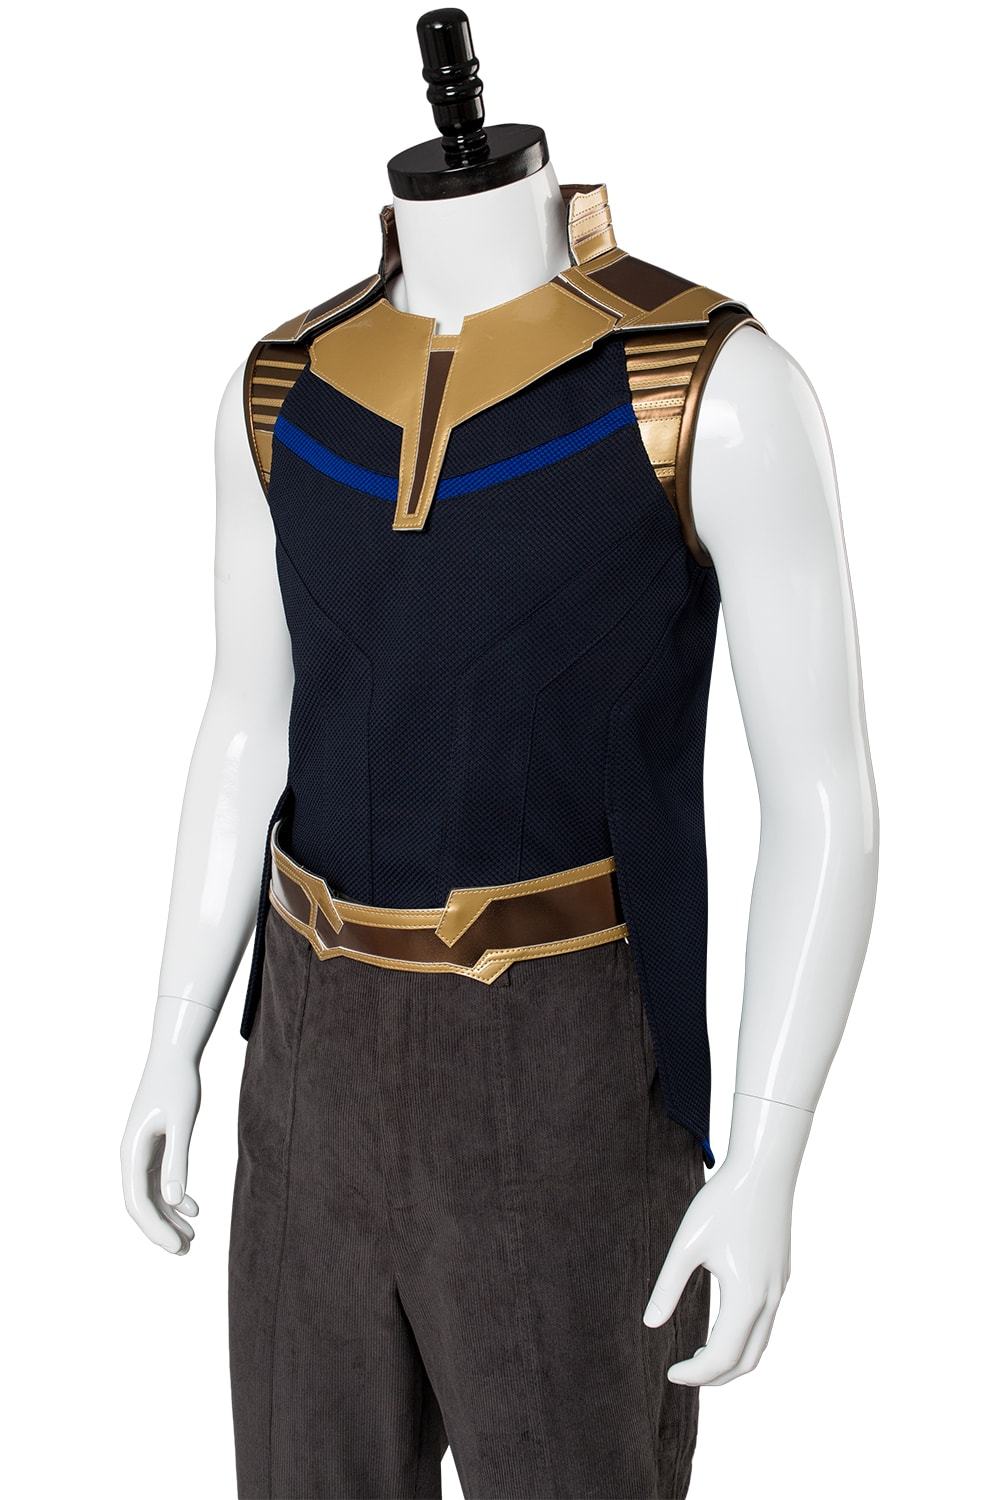 Avengers 3 Infinity War Thanos Cosplay Costume